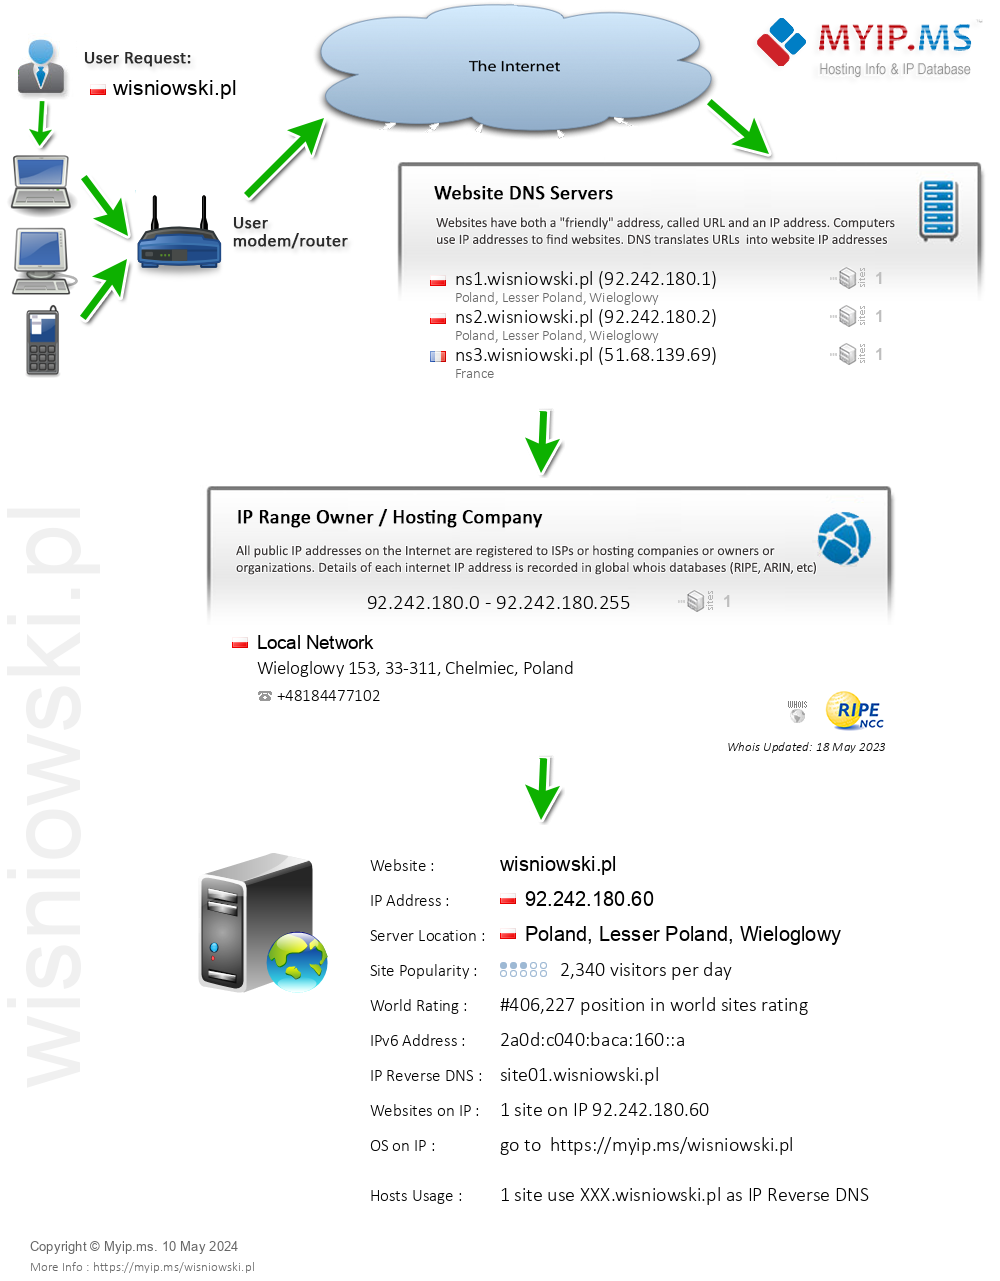 Wisniowski.pl - Website Hosting Visual IP Diagram